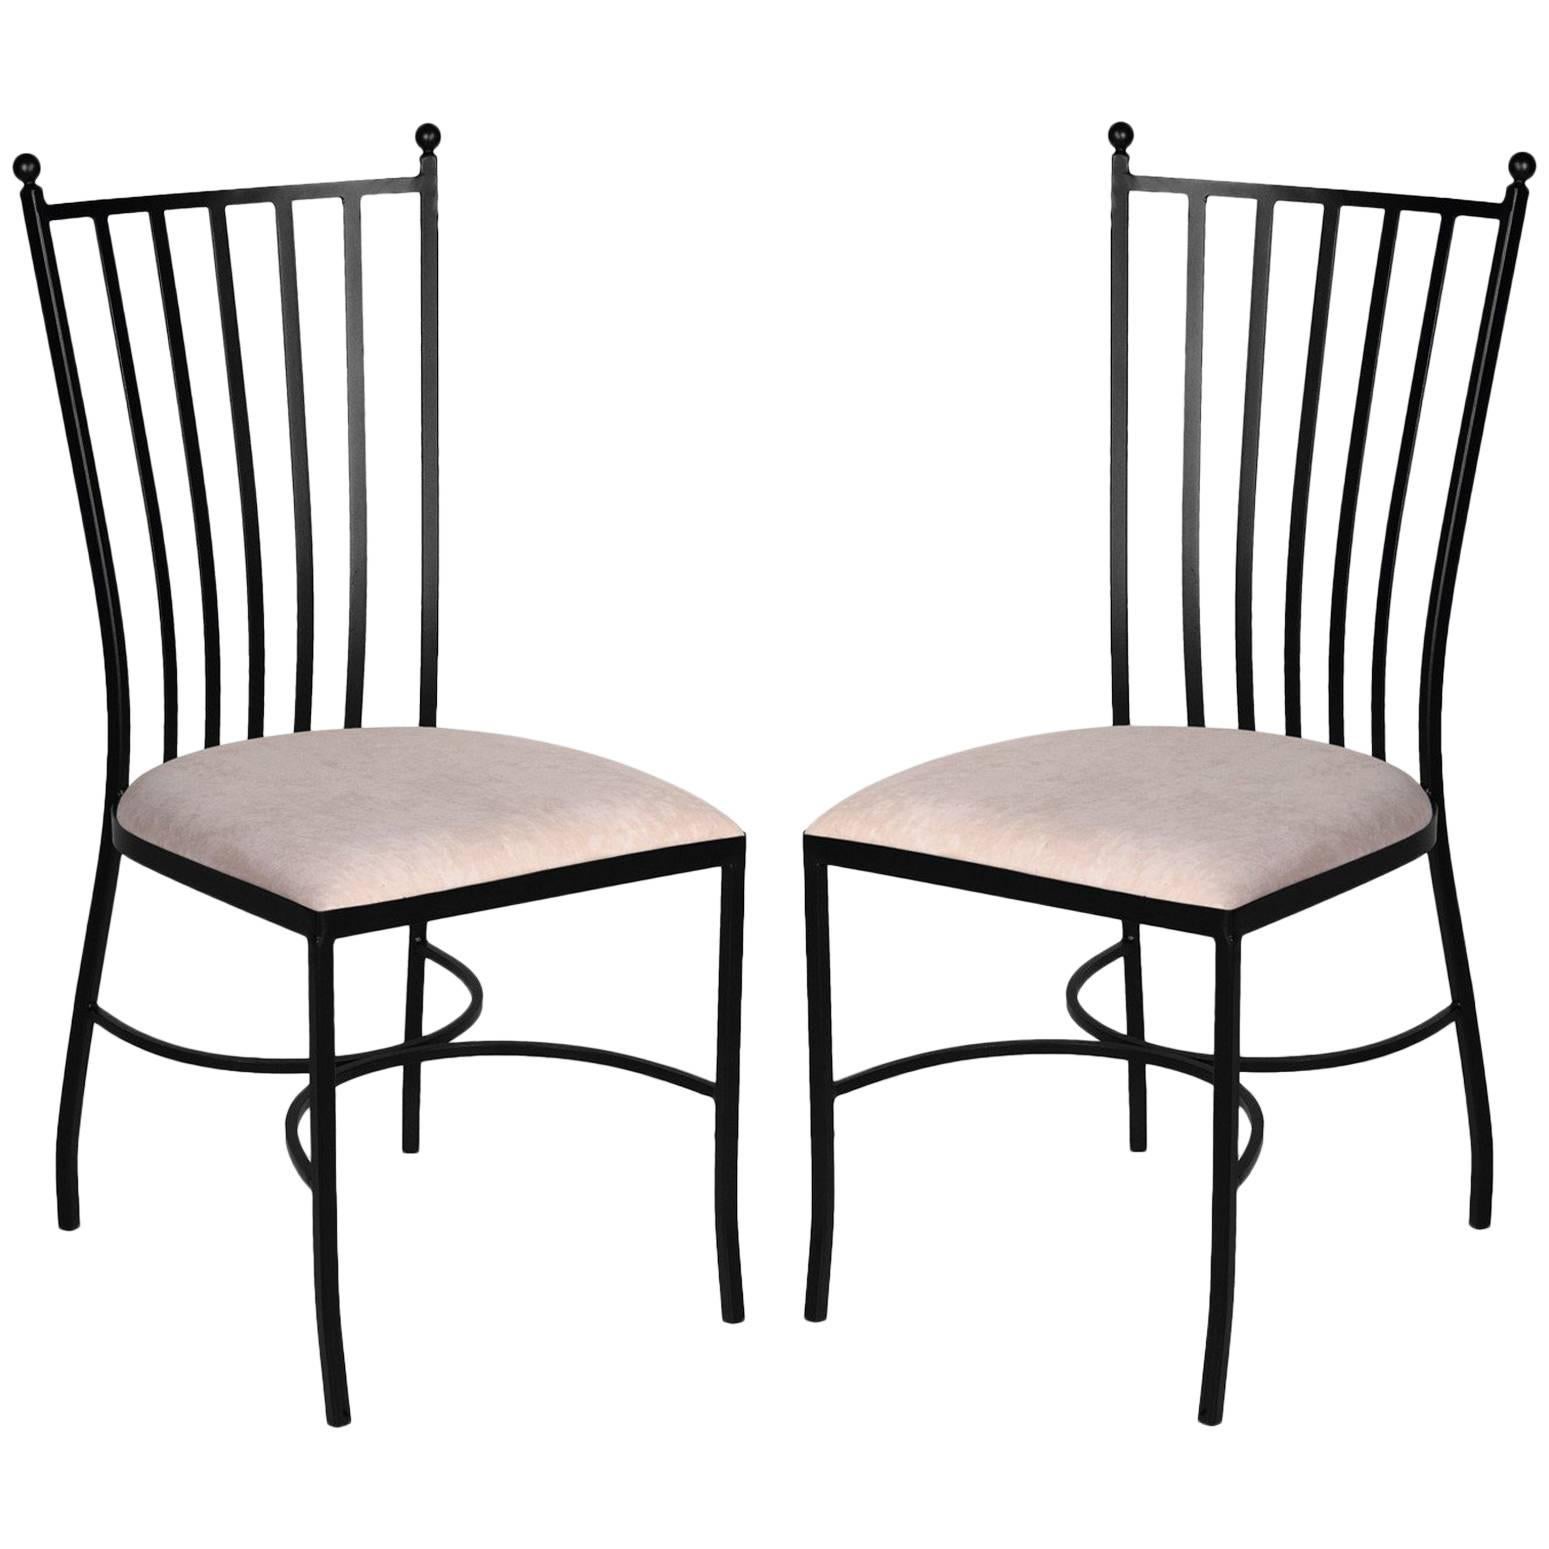 Garden Chairs in Wrought Iron. Indoor & Outdoor For Sale